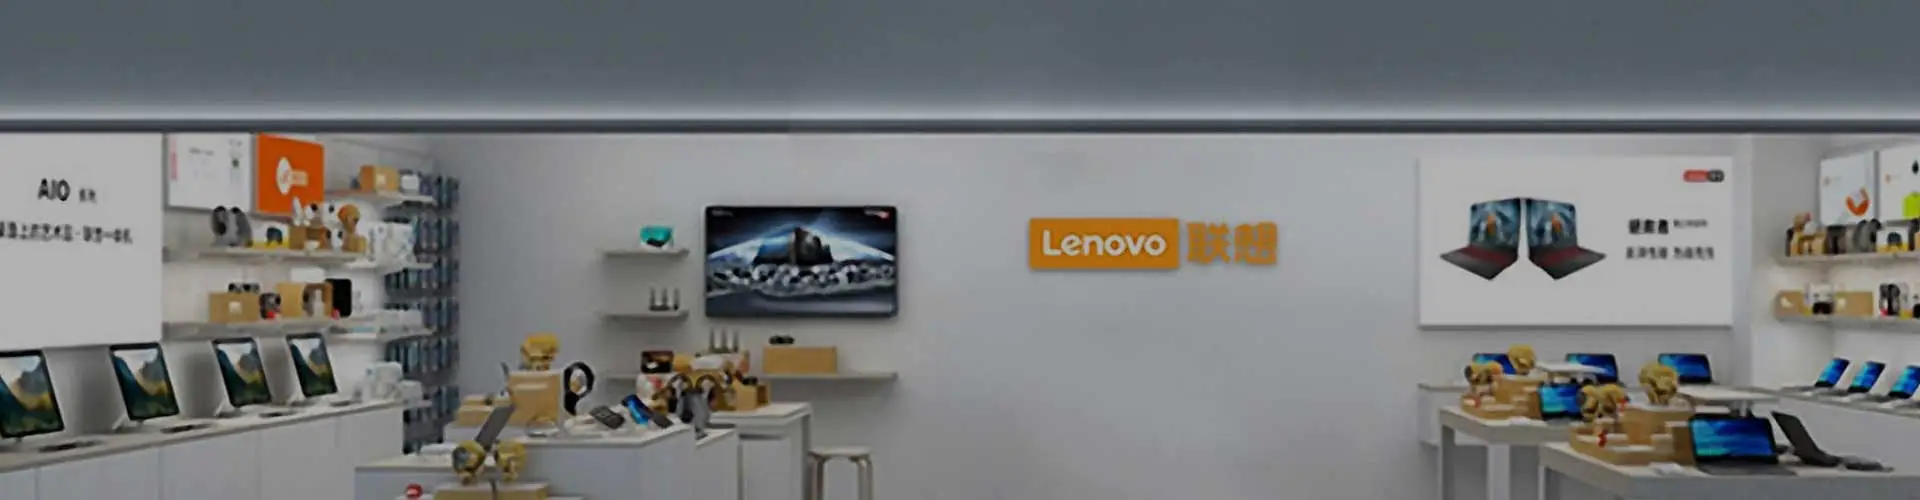 Case study - Lenovo group